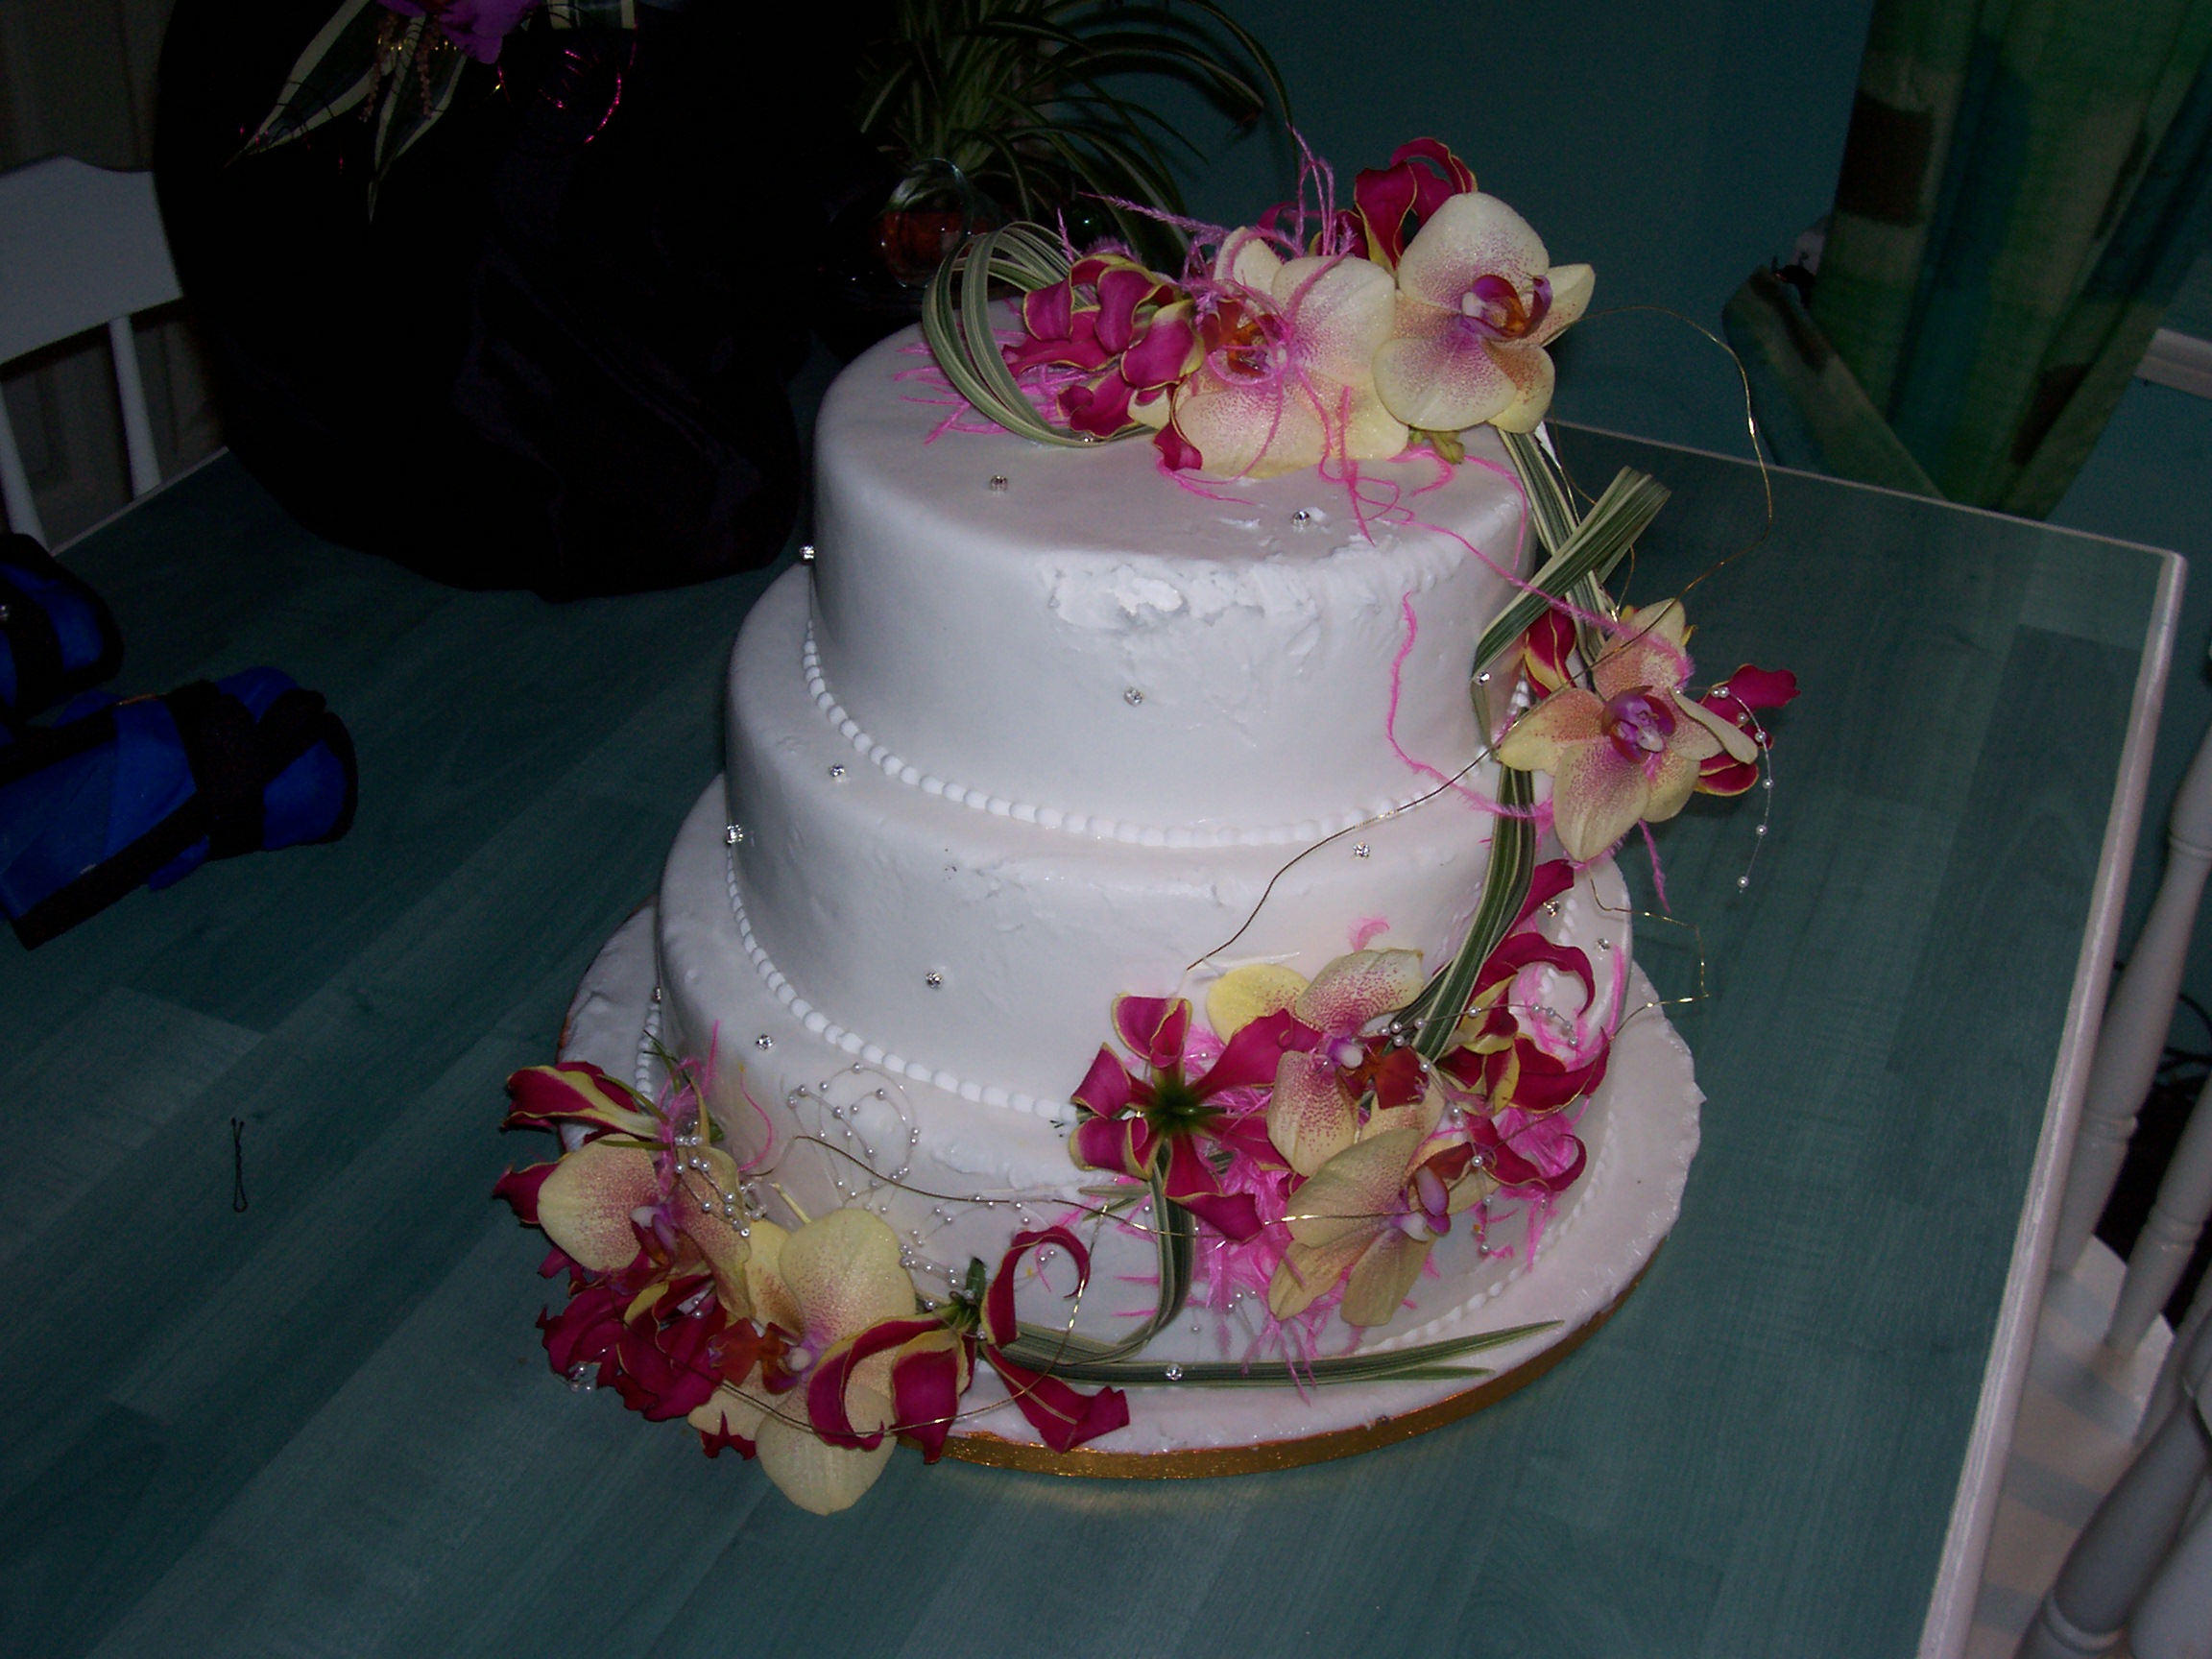 Cake arrangement